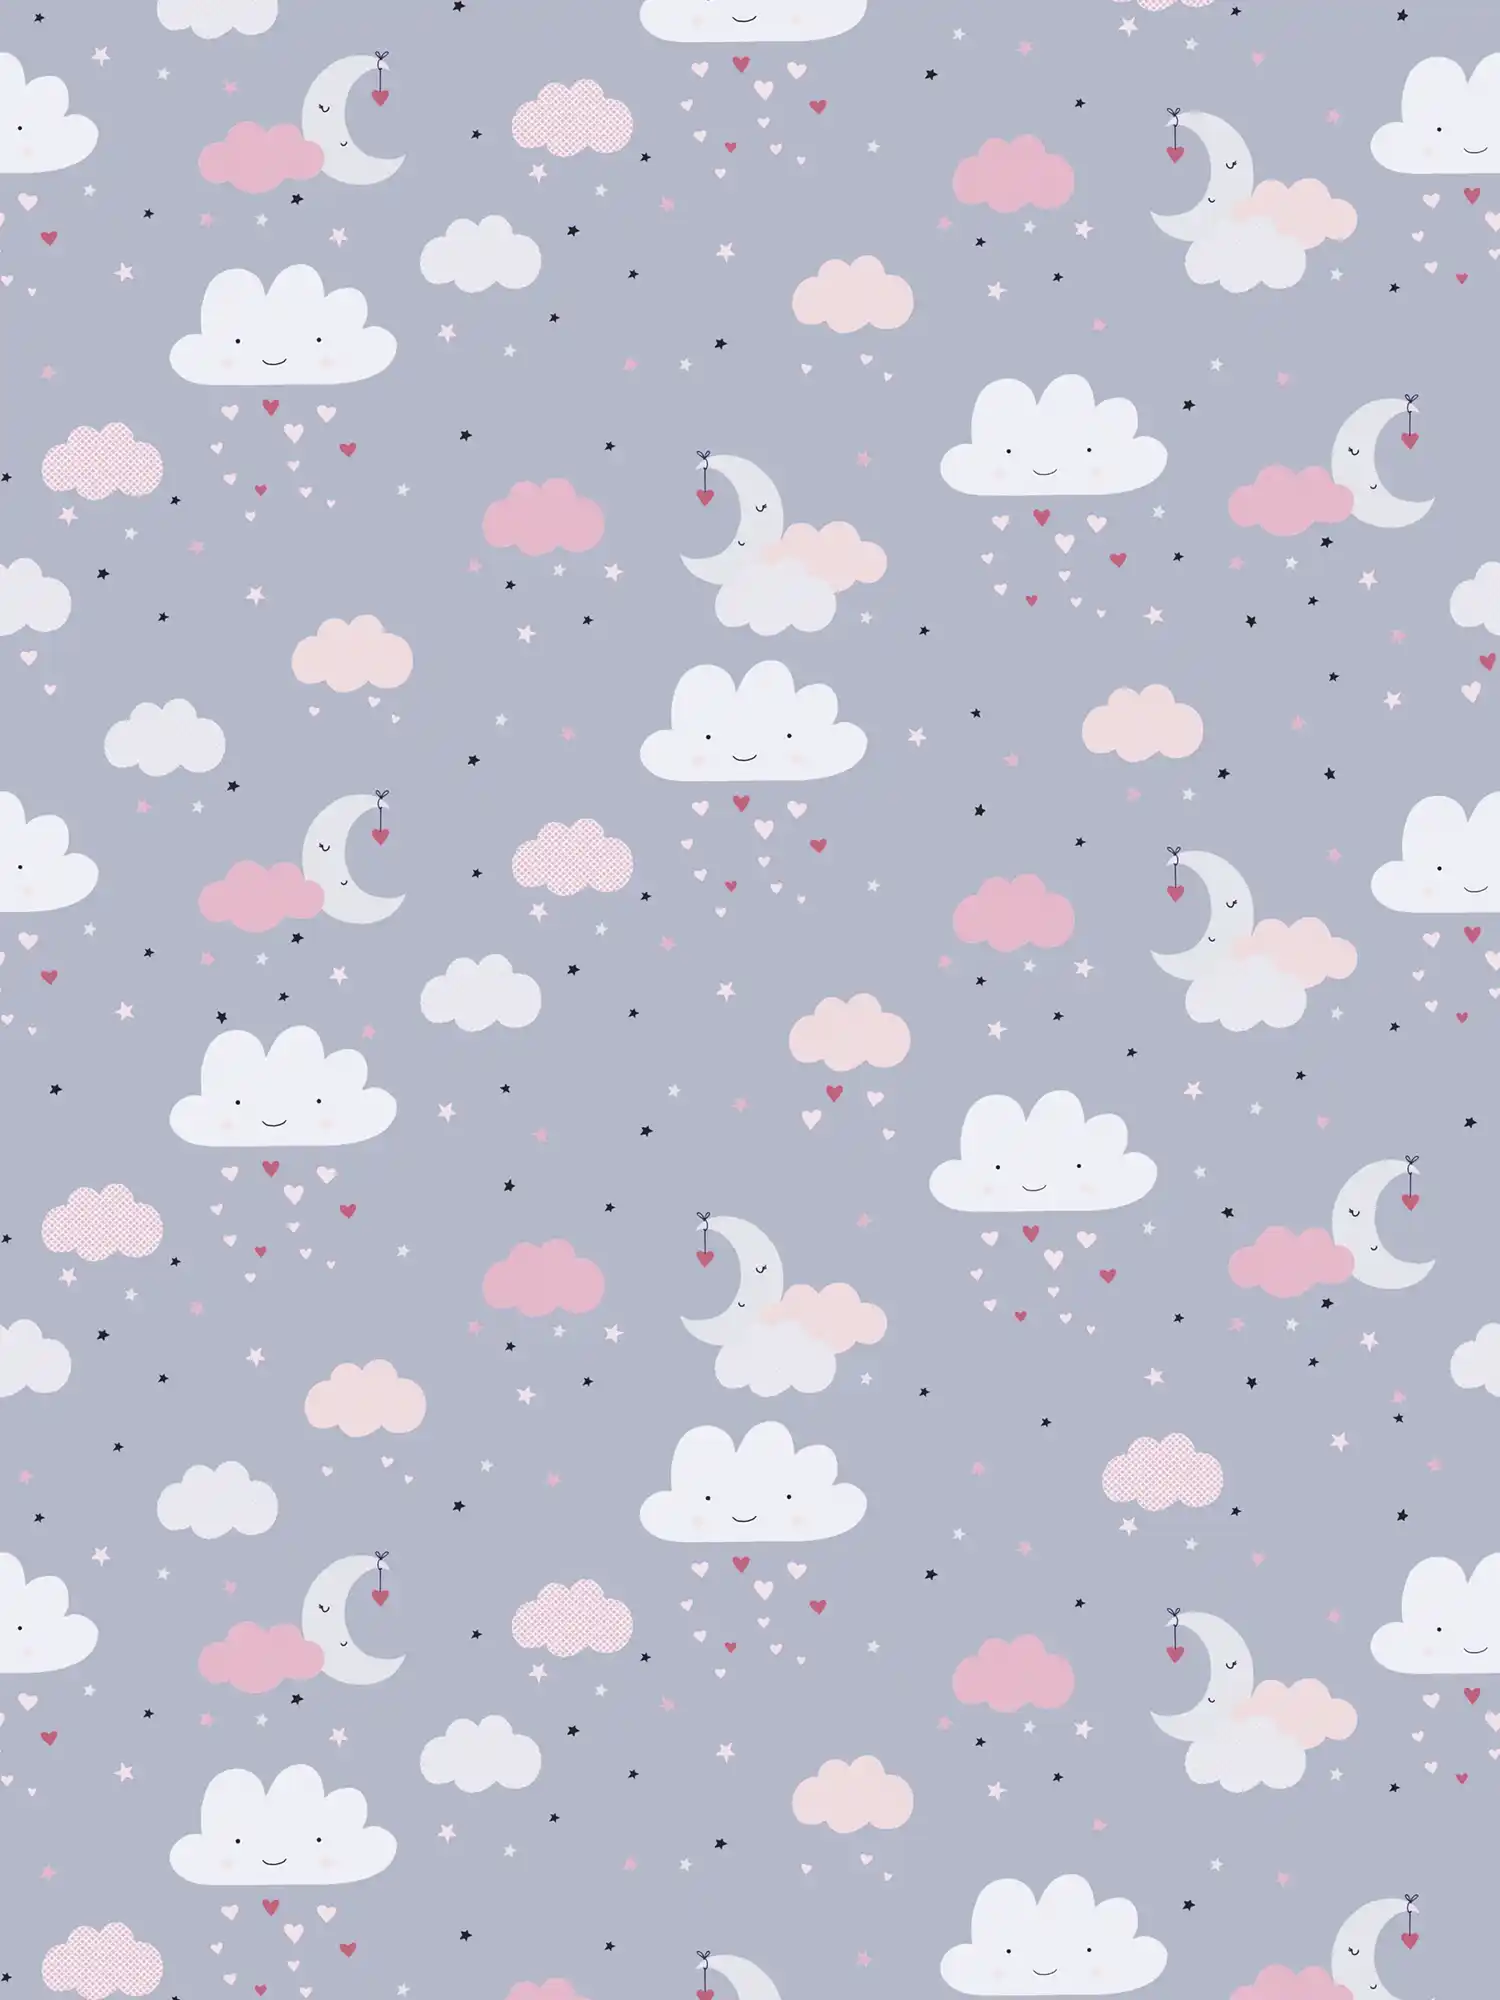         Nursery wallpaper girl night sky - grey, pink, beige
    